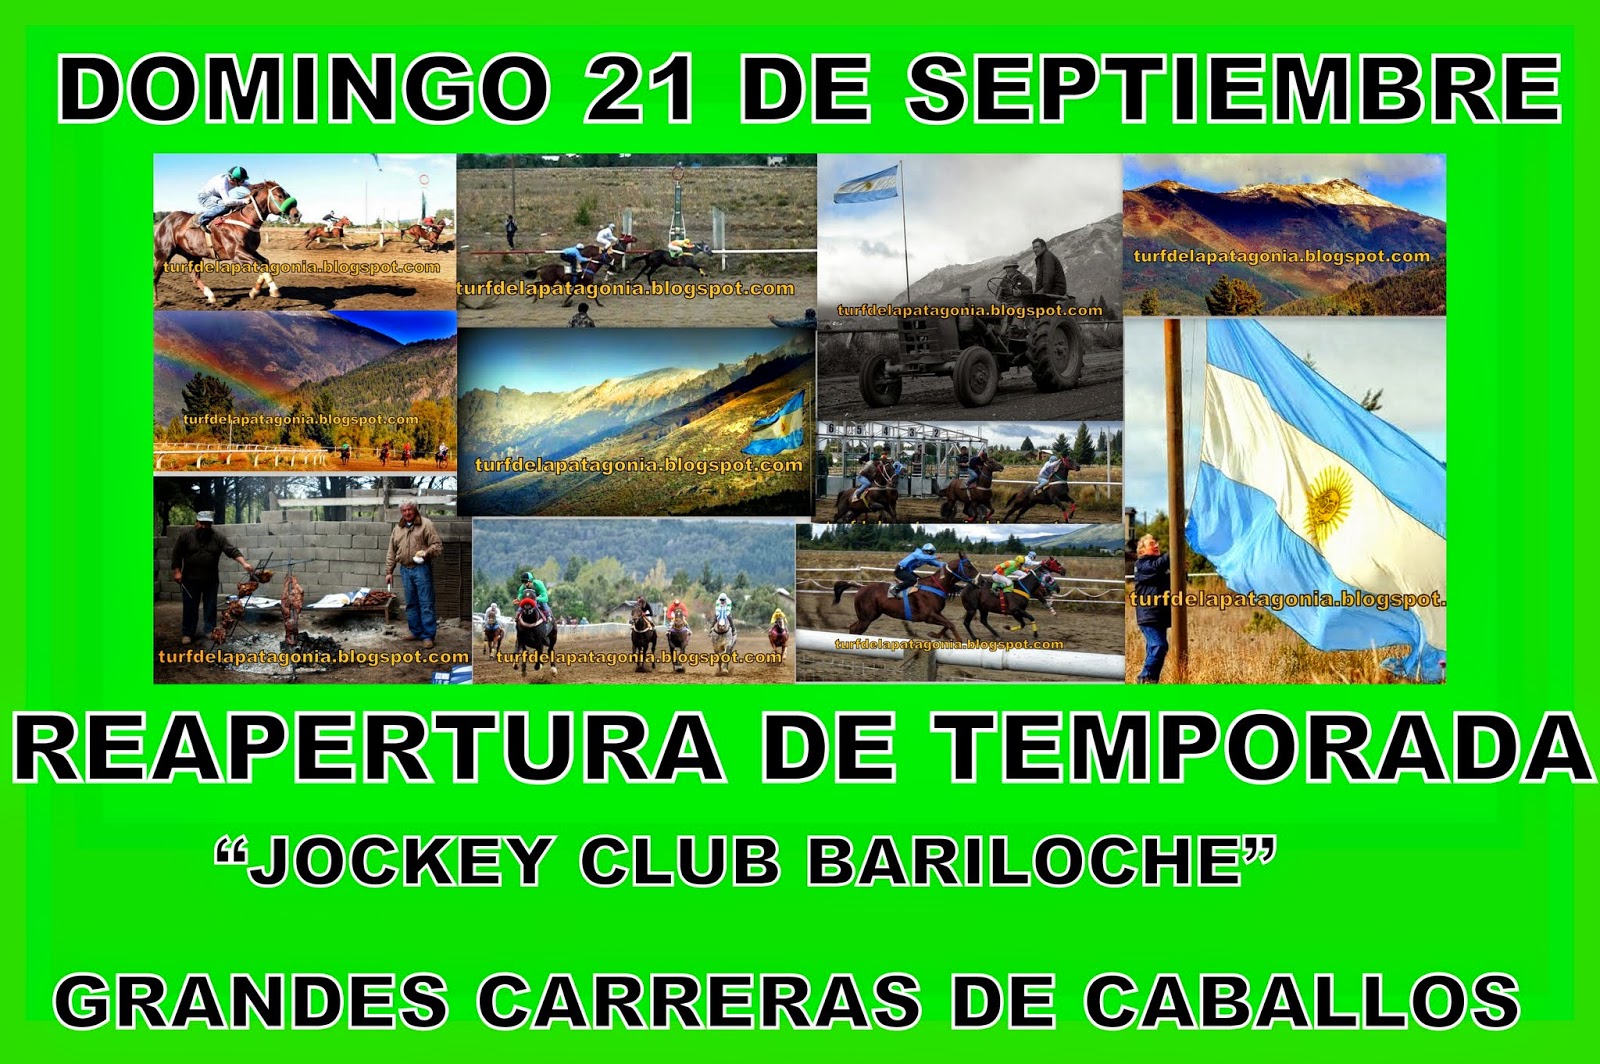 http://turfdelapatagonia.blogspot.com.ar/2014/09/2109-programa-de-carreras-de-caballos_6.html